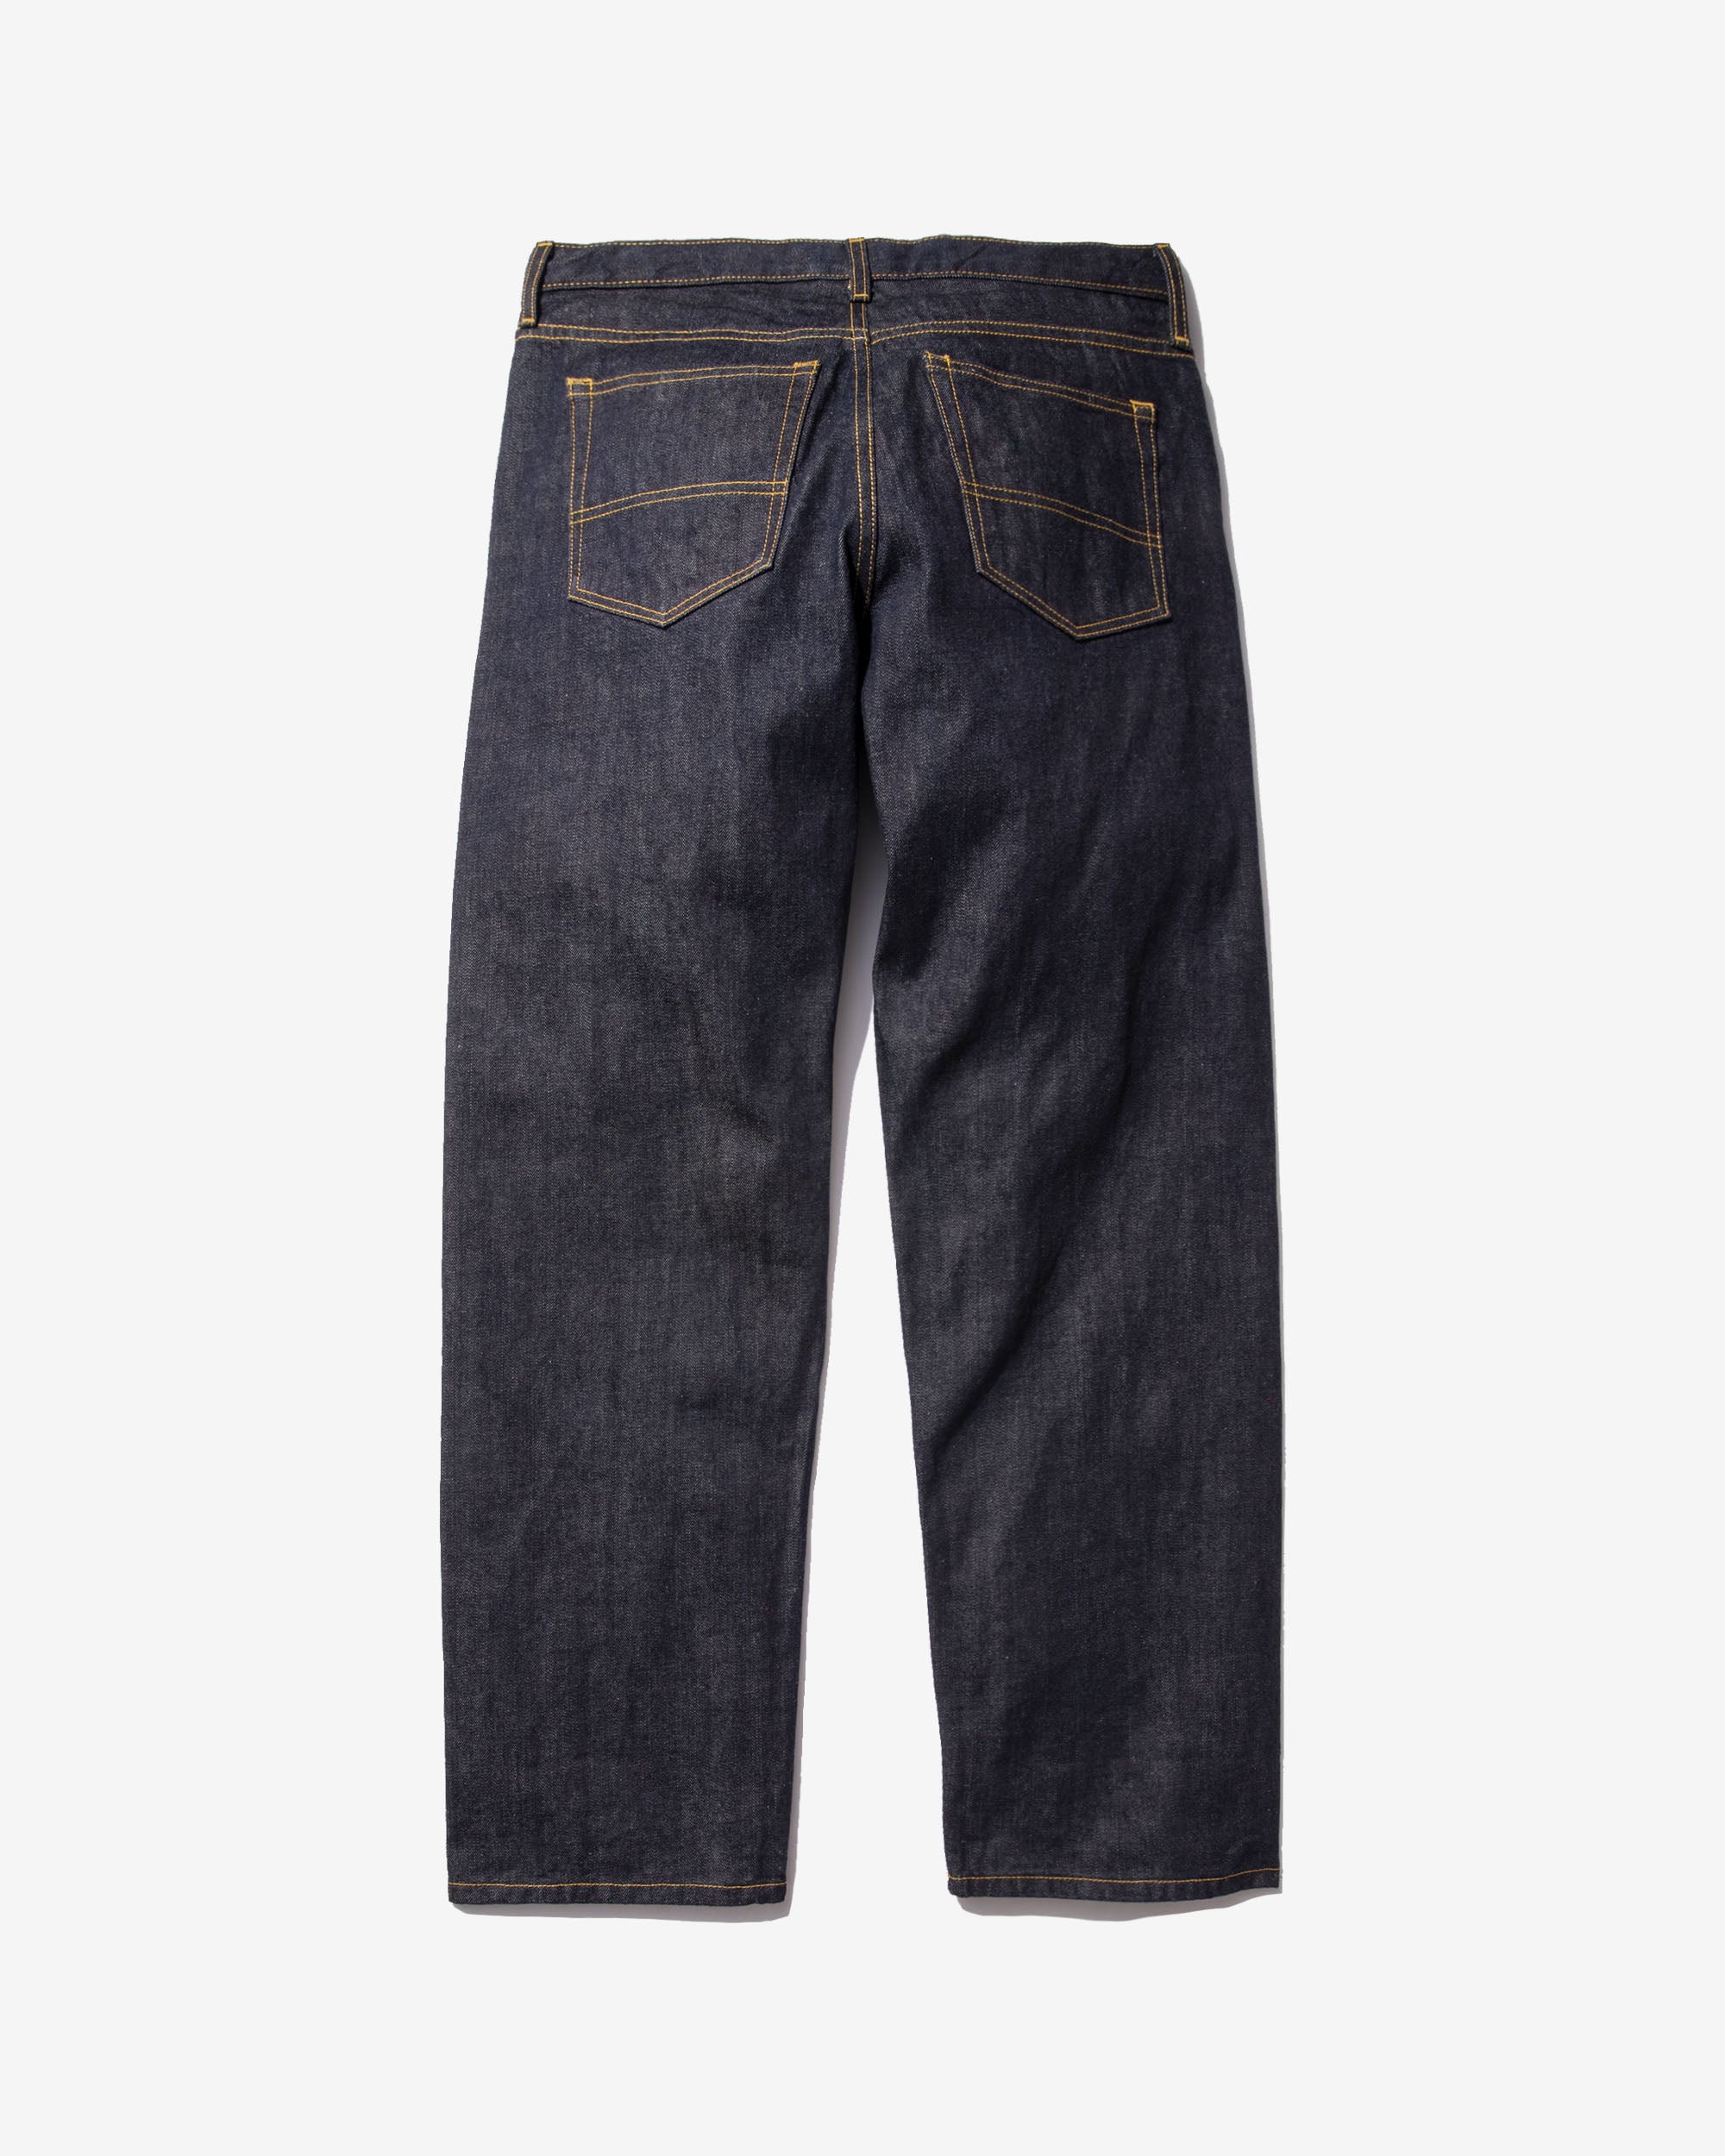 Slim Fit Plain Men Denim Jeans, Blue at Rs 750/piece in Satara | ID:  2849325979097